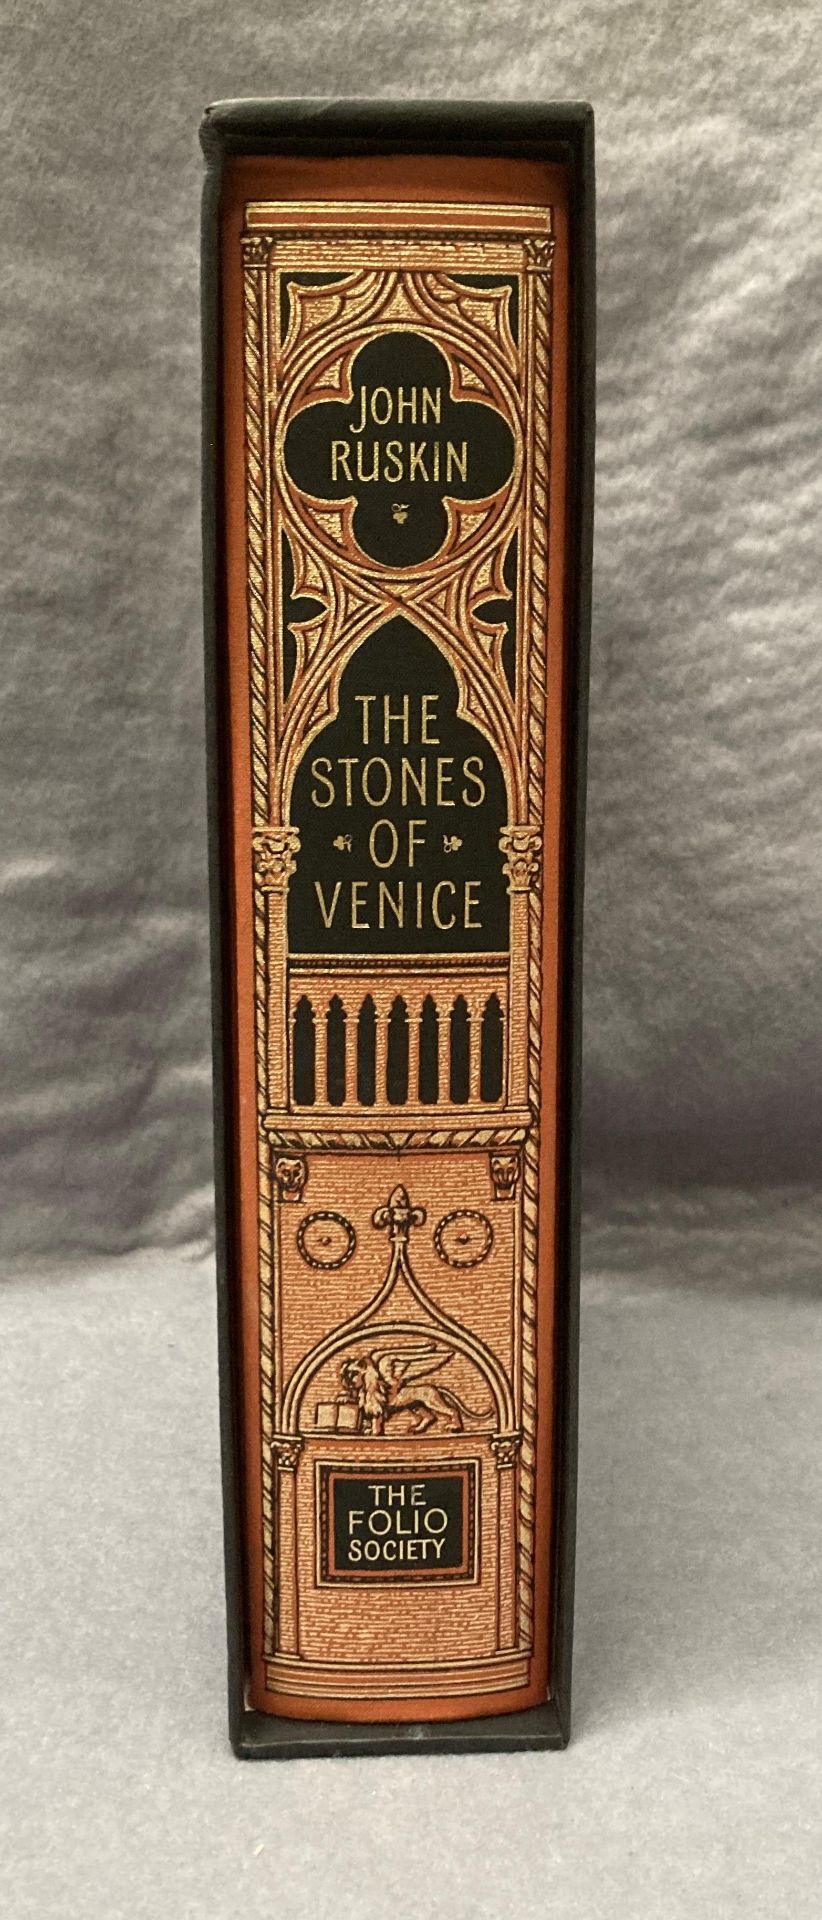 Four Folio Society books by John Ruskin 'The Stones of Venice' 2001, - Image 5 of 5